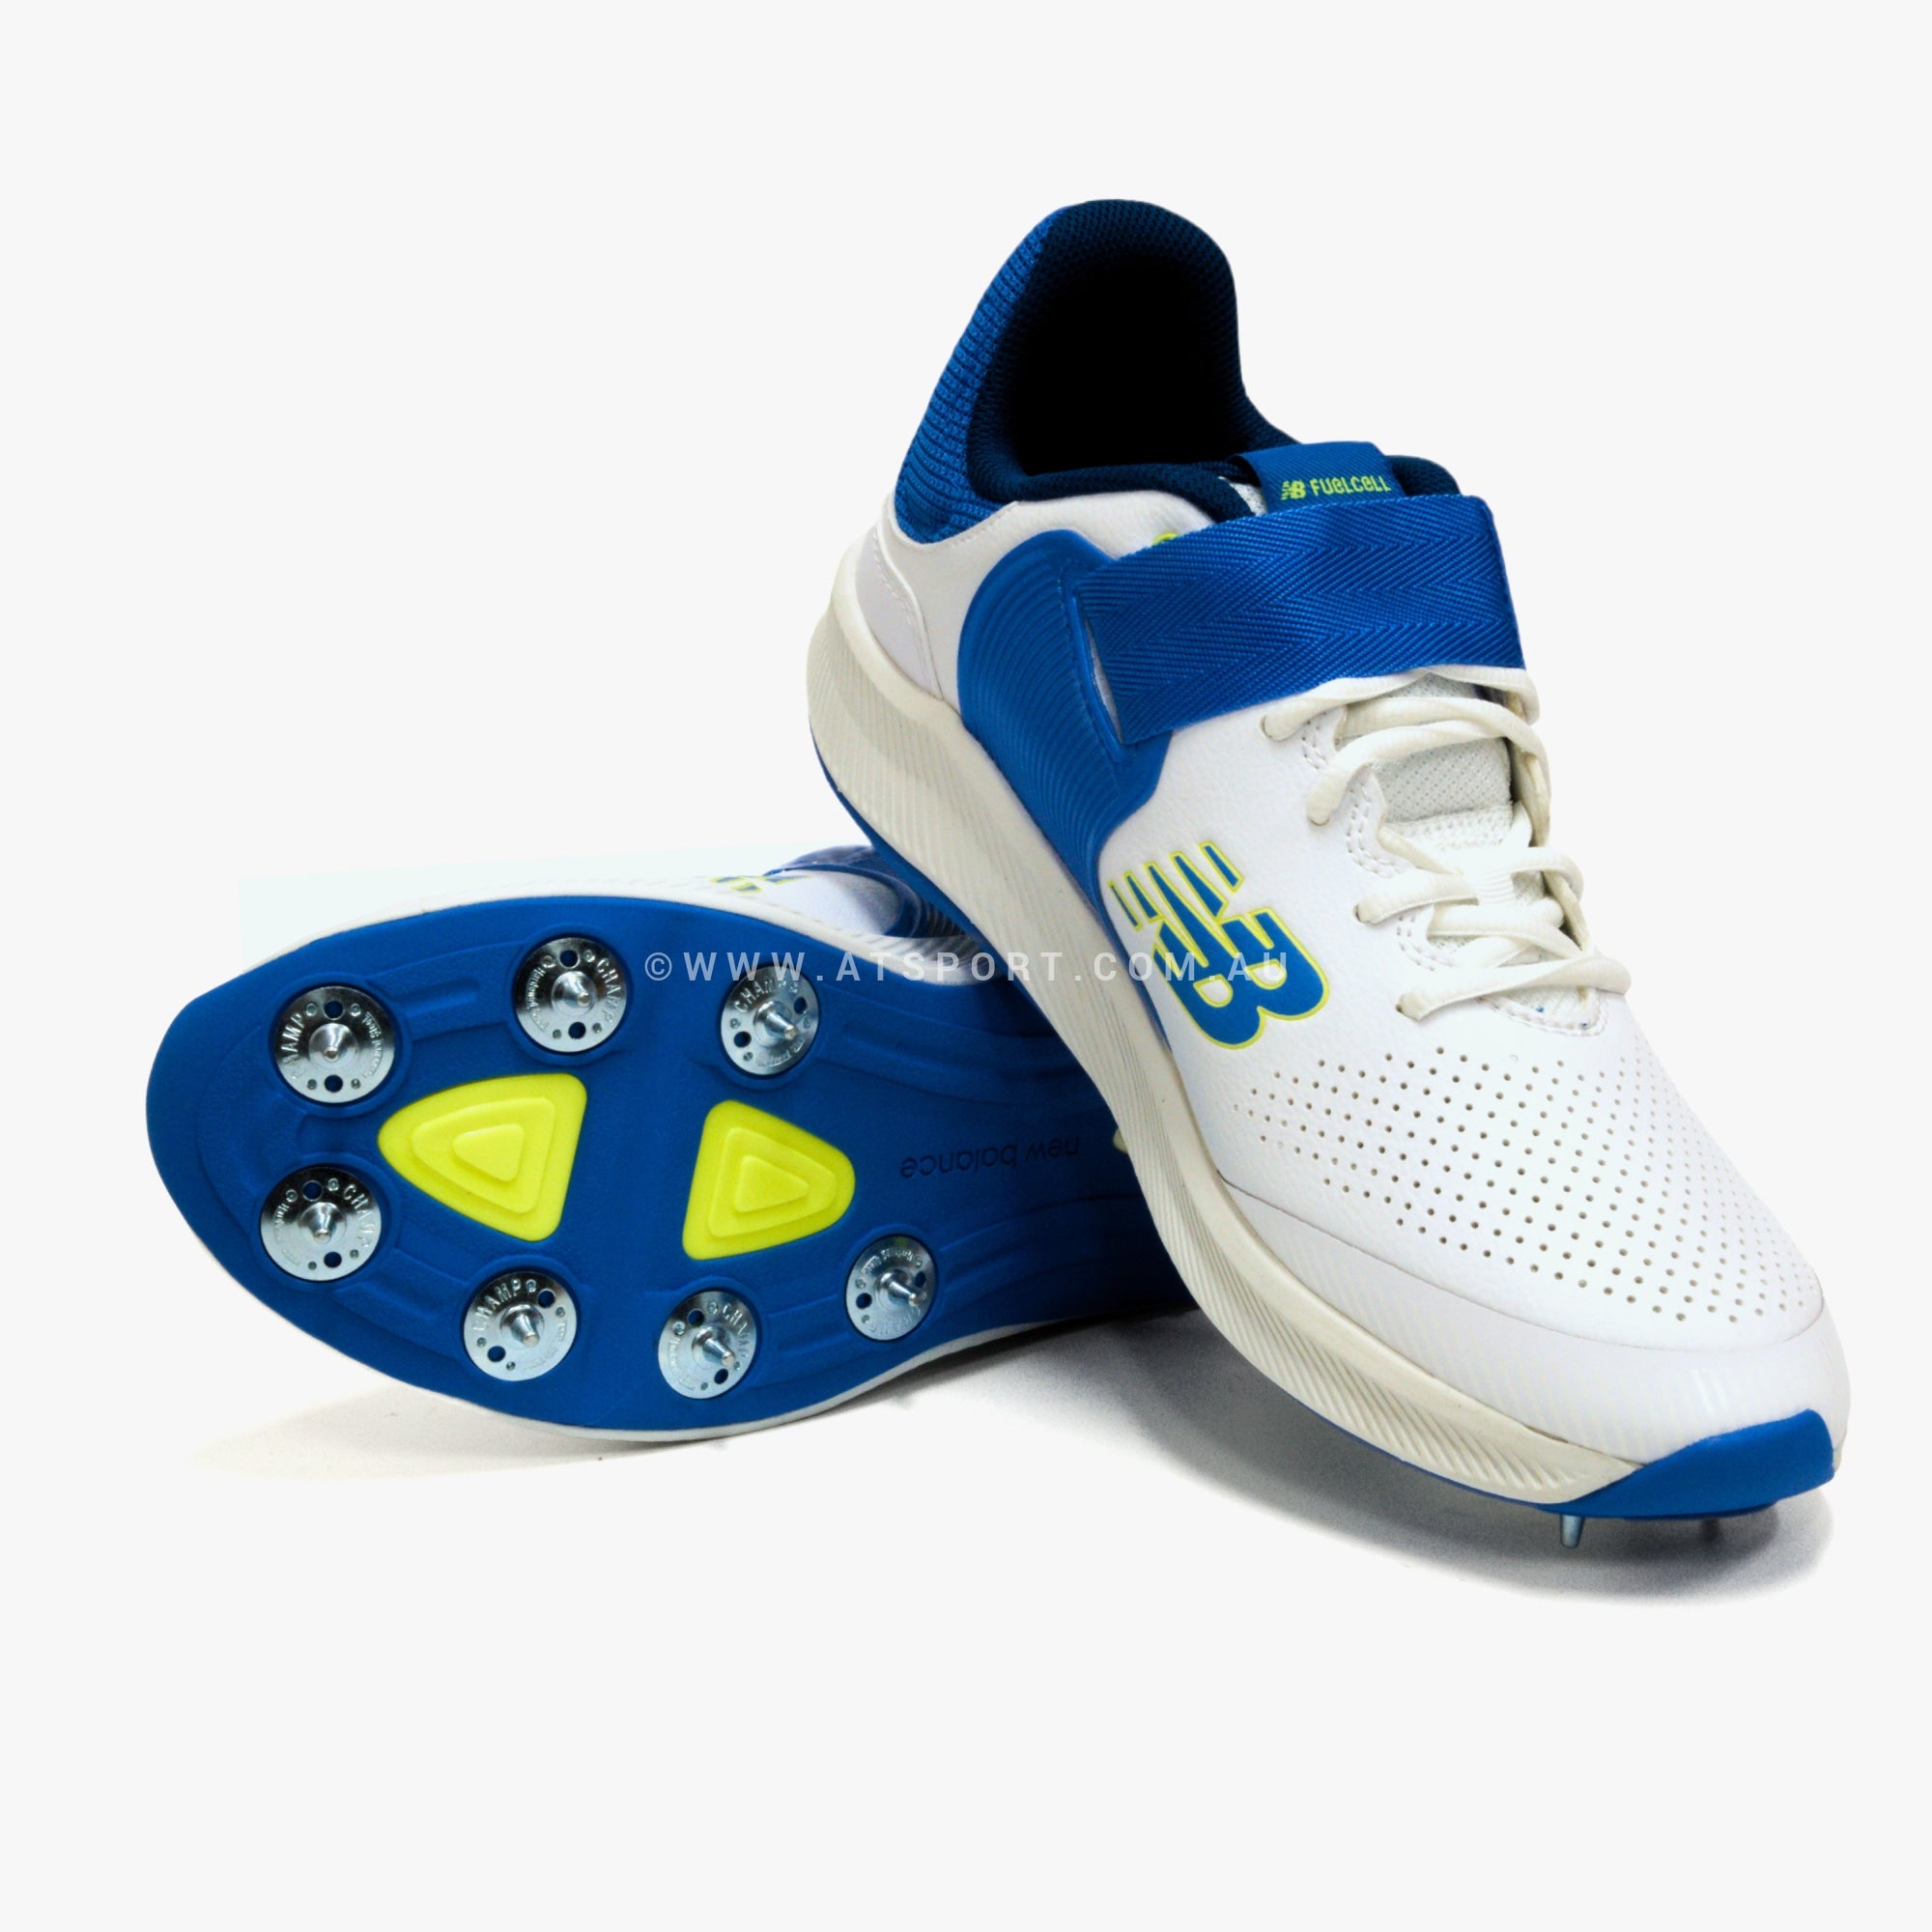 New Balance Ck4040 V5 Spike Cricket Shoes / Spikes Bowling